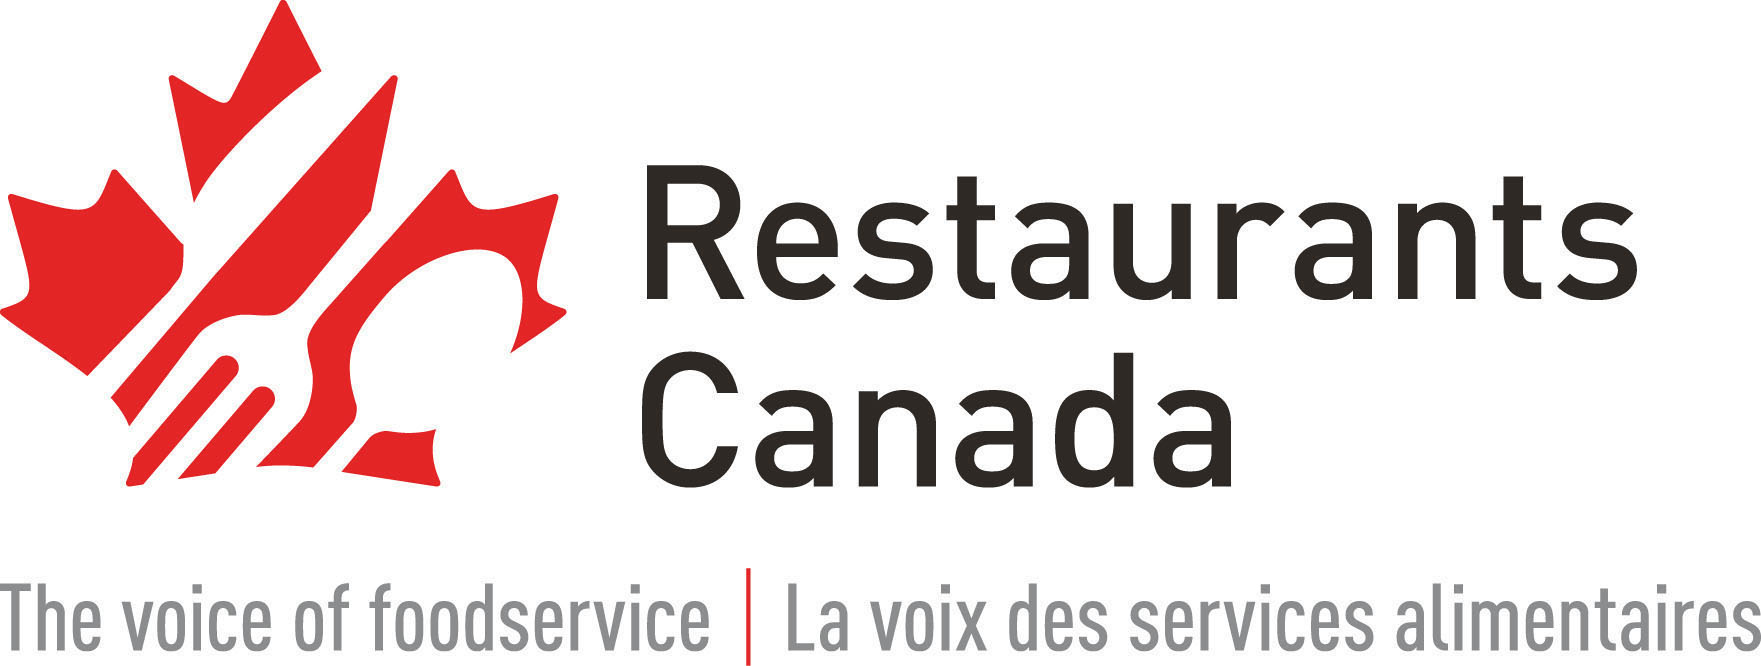 Restaurants Canada W